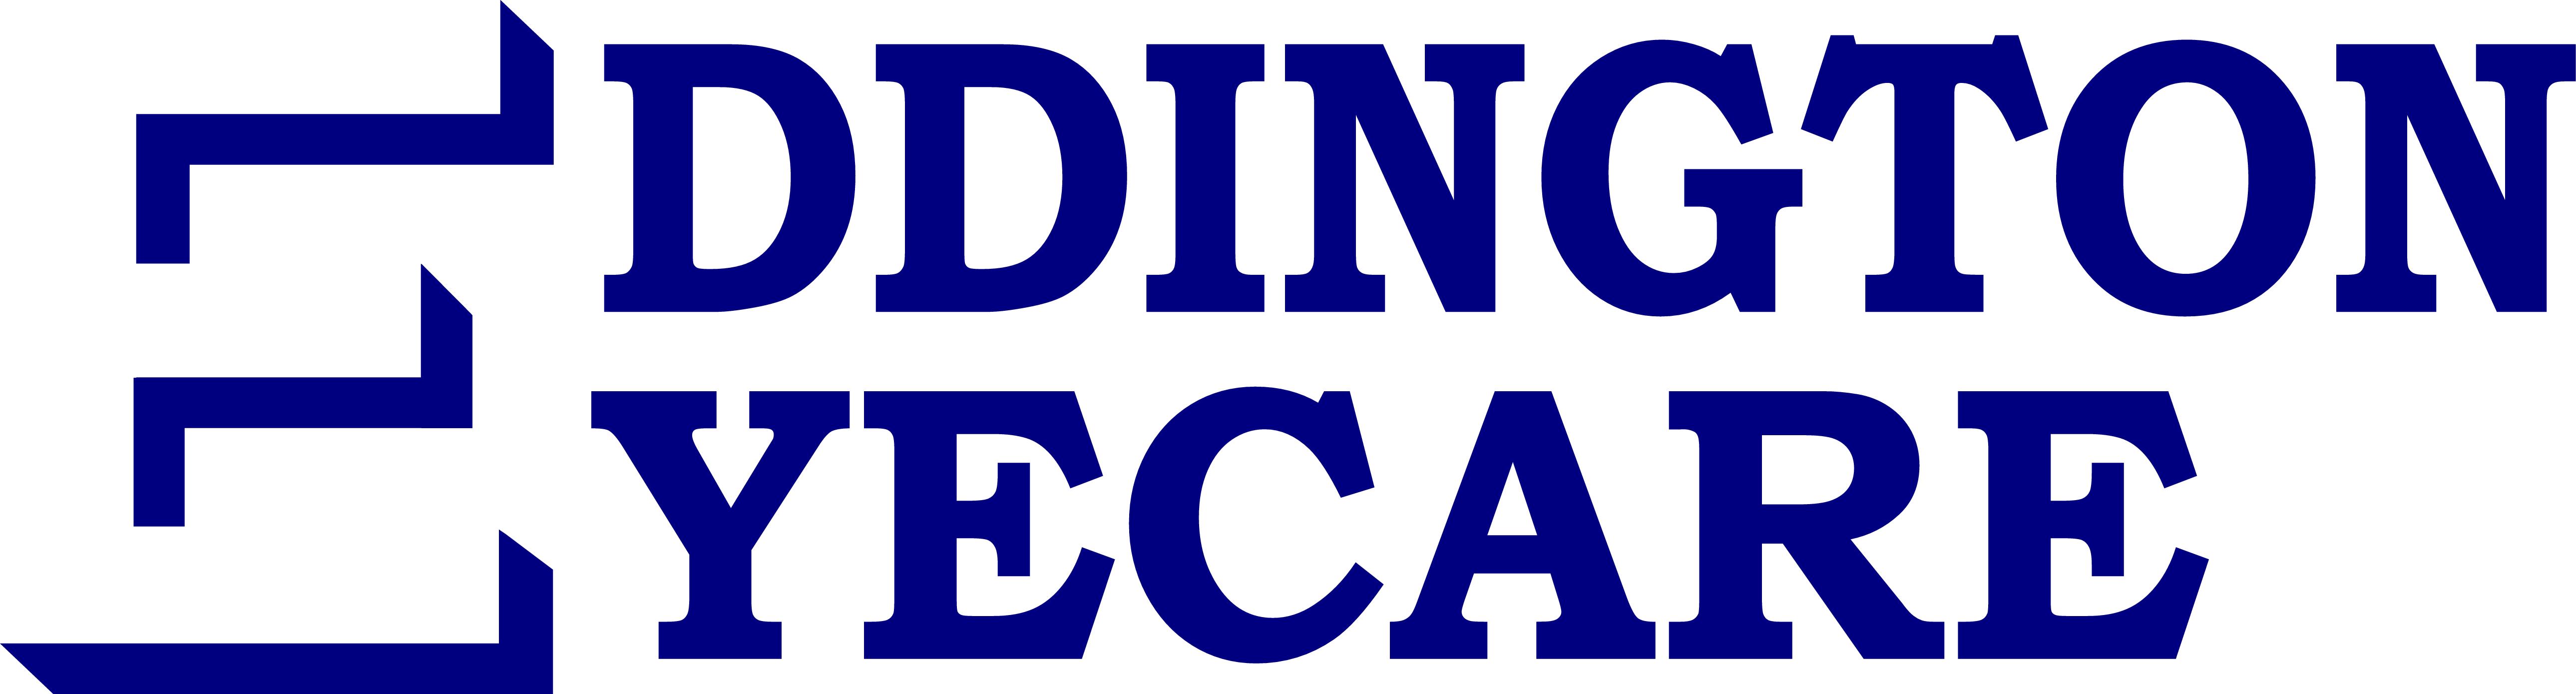 Eddington Eyecare Logo